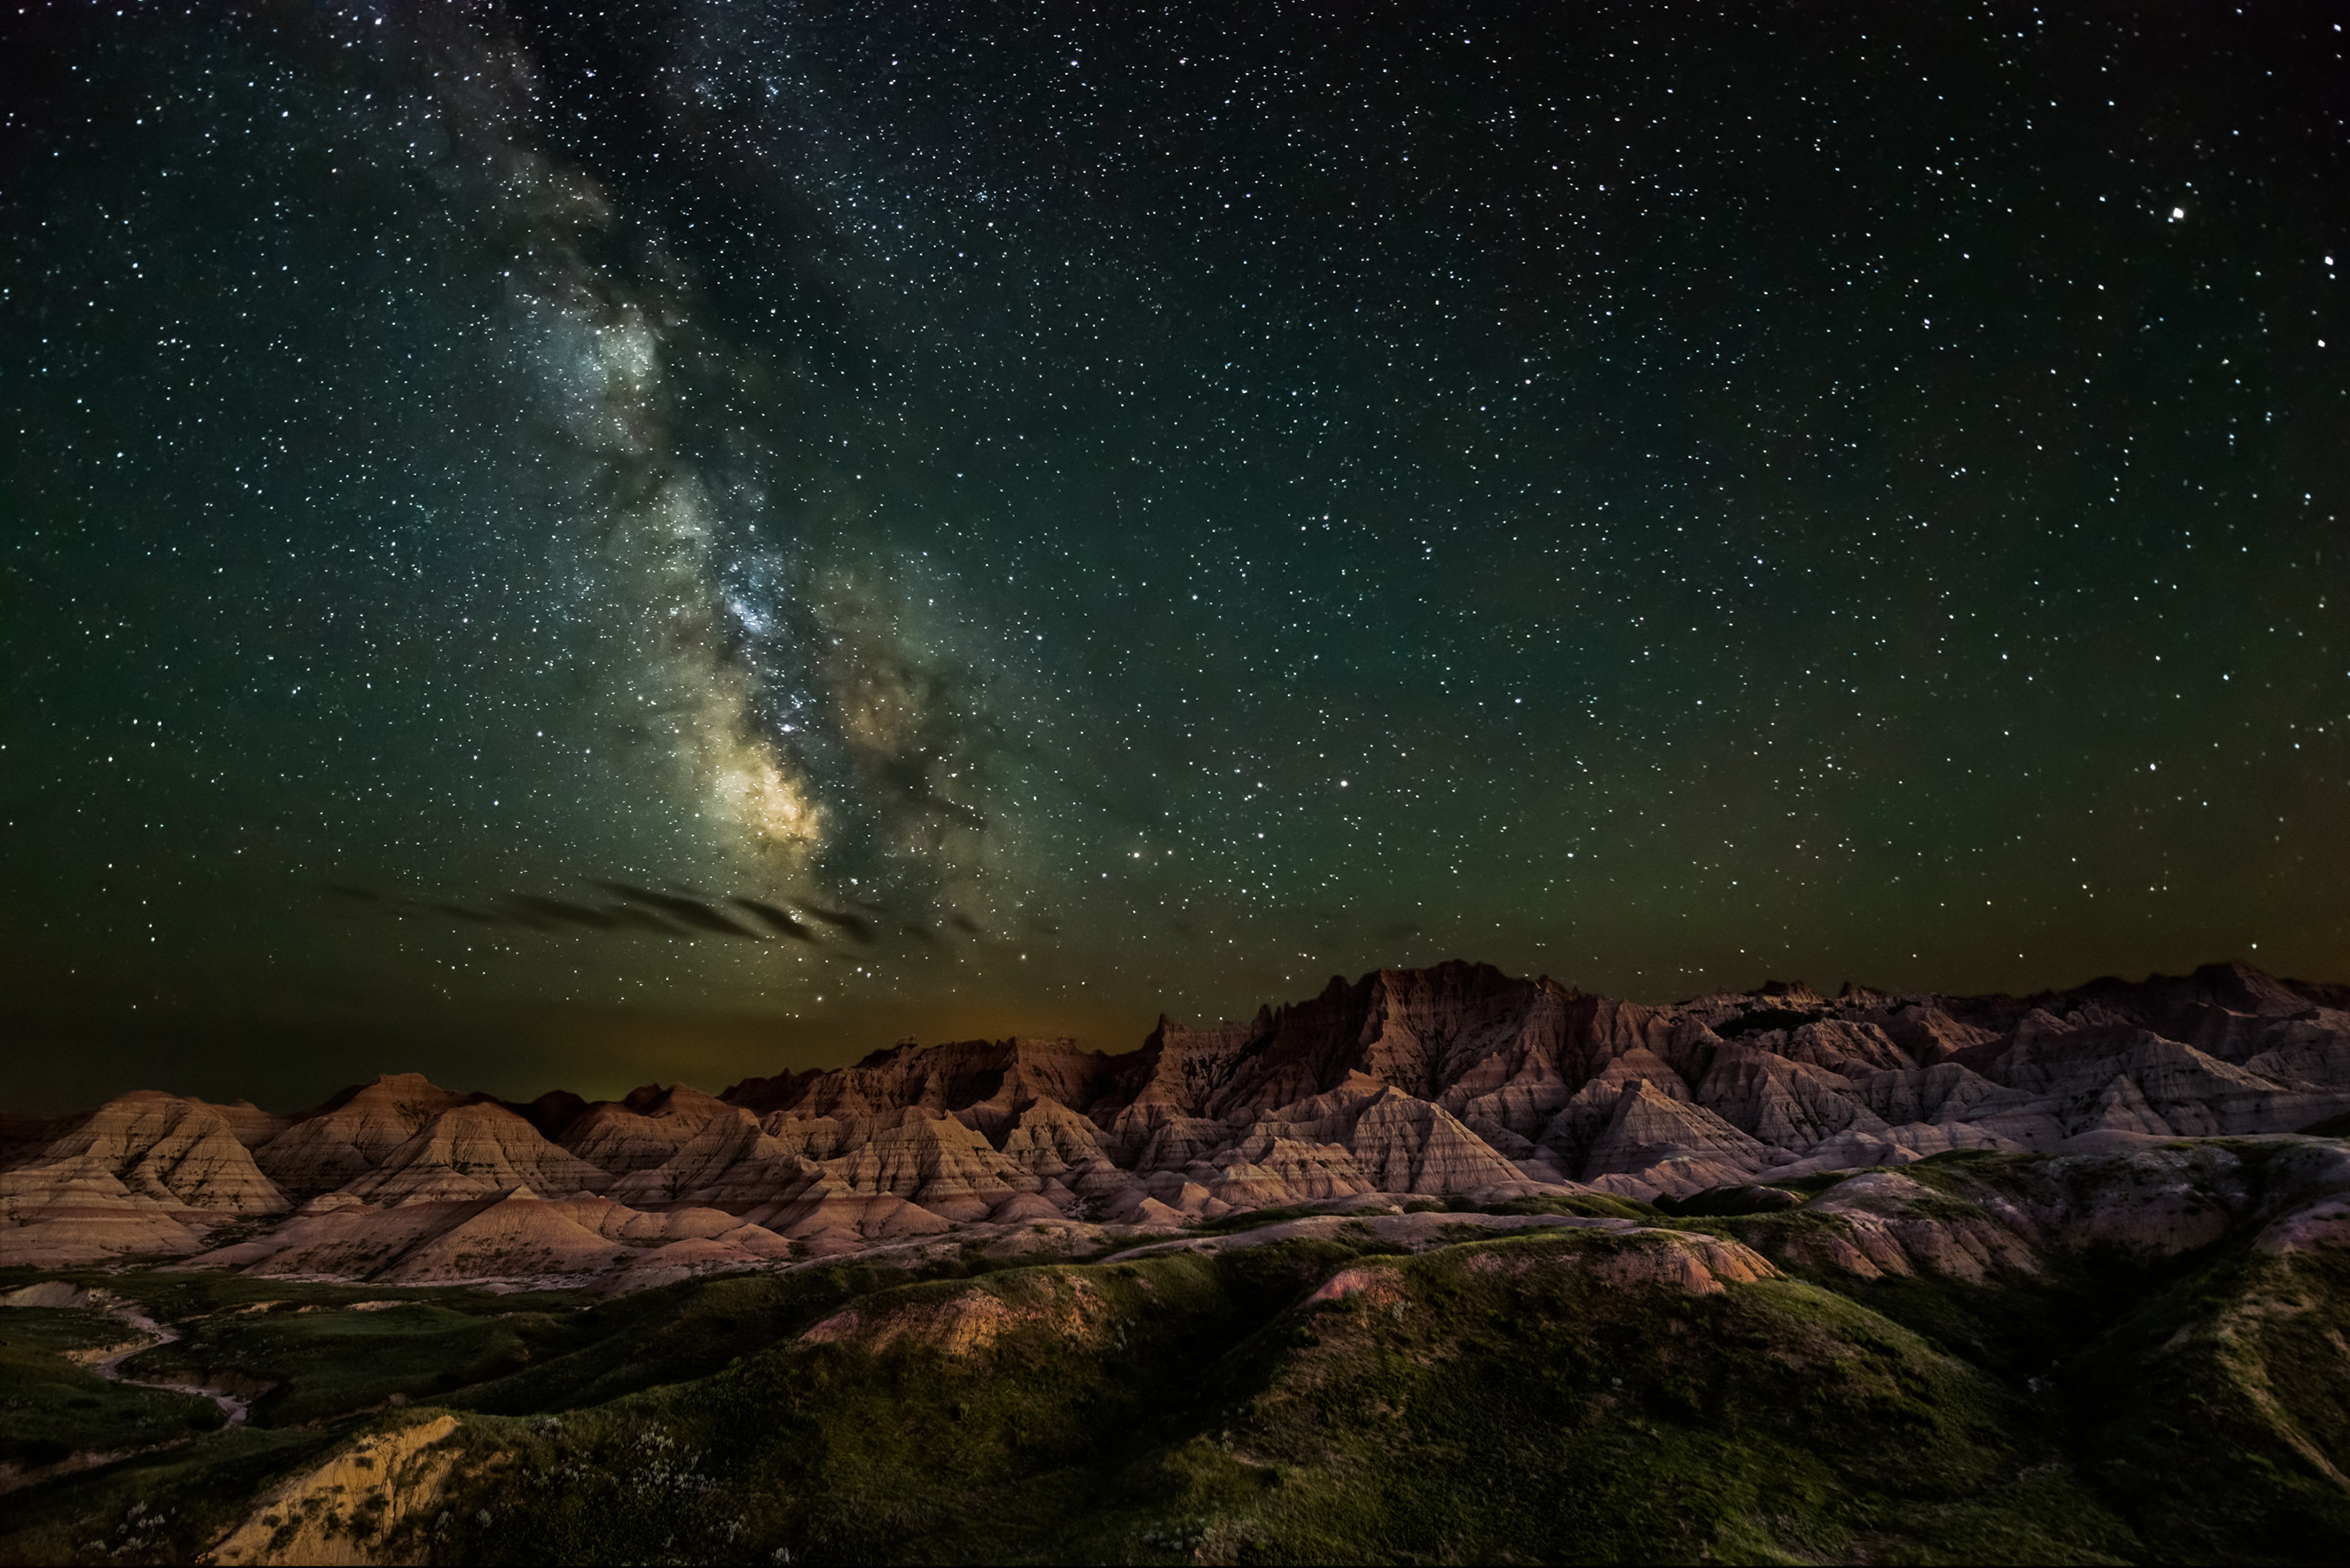 Badlands National Park, Erik Fremsted, Share the Experience 2015 photo contest